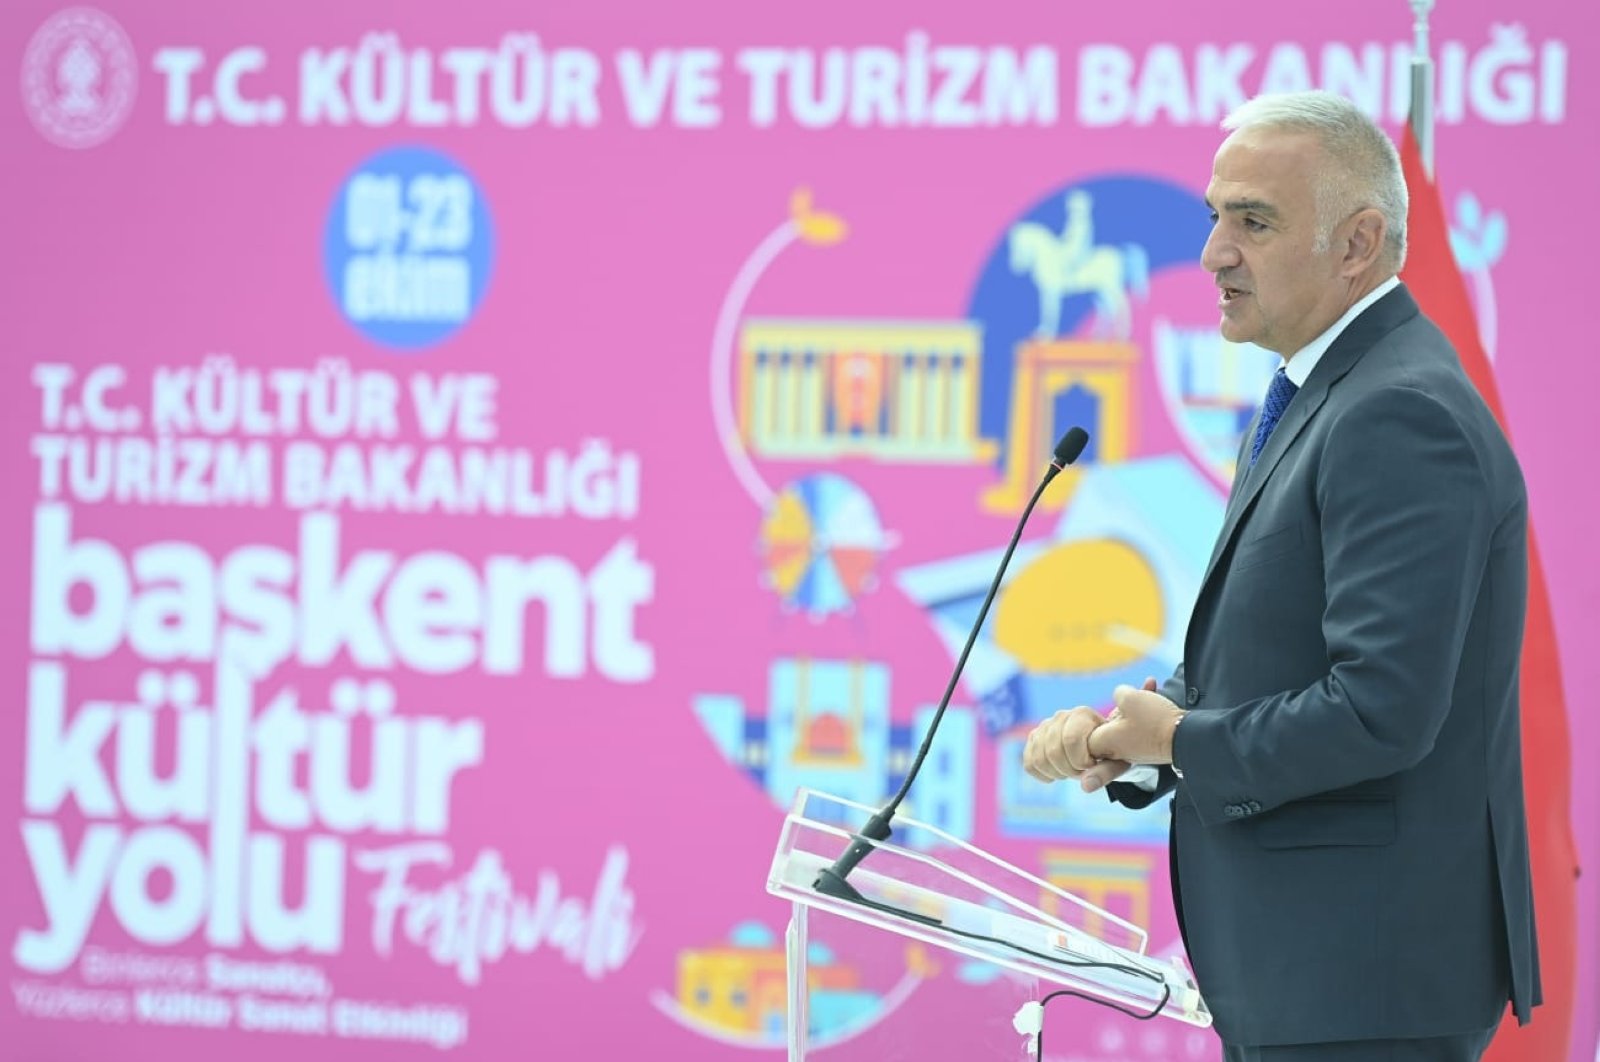 Festival jalan budaya Türkiye berkembang, kata menteri